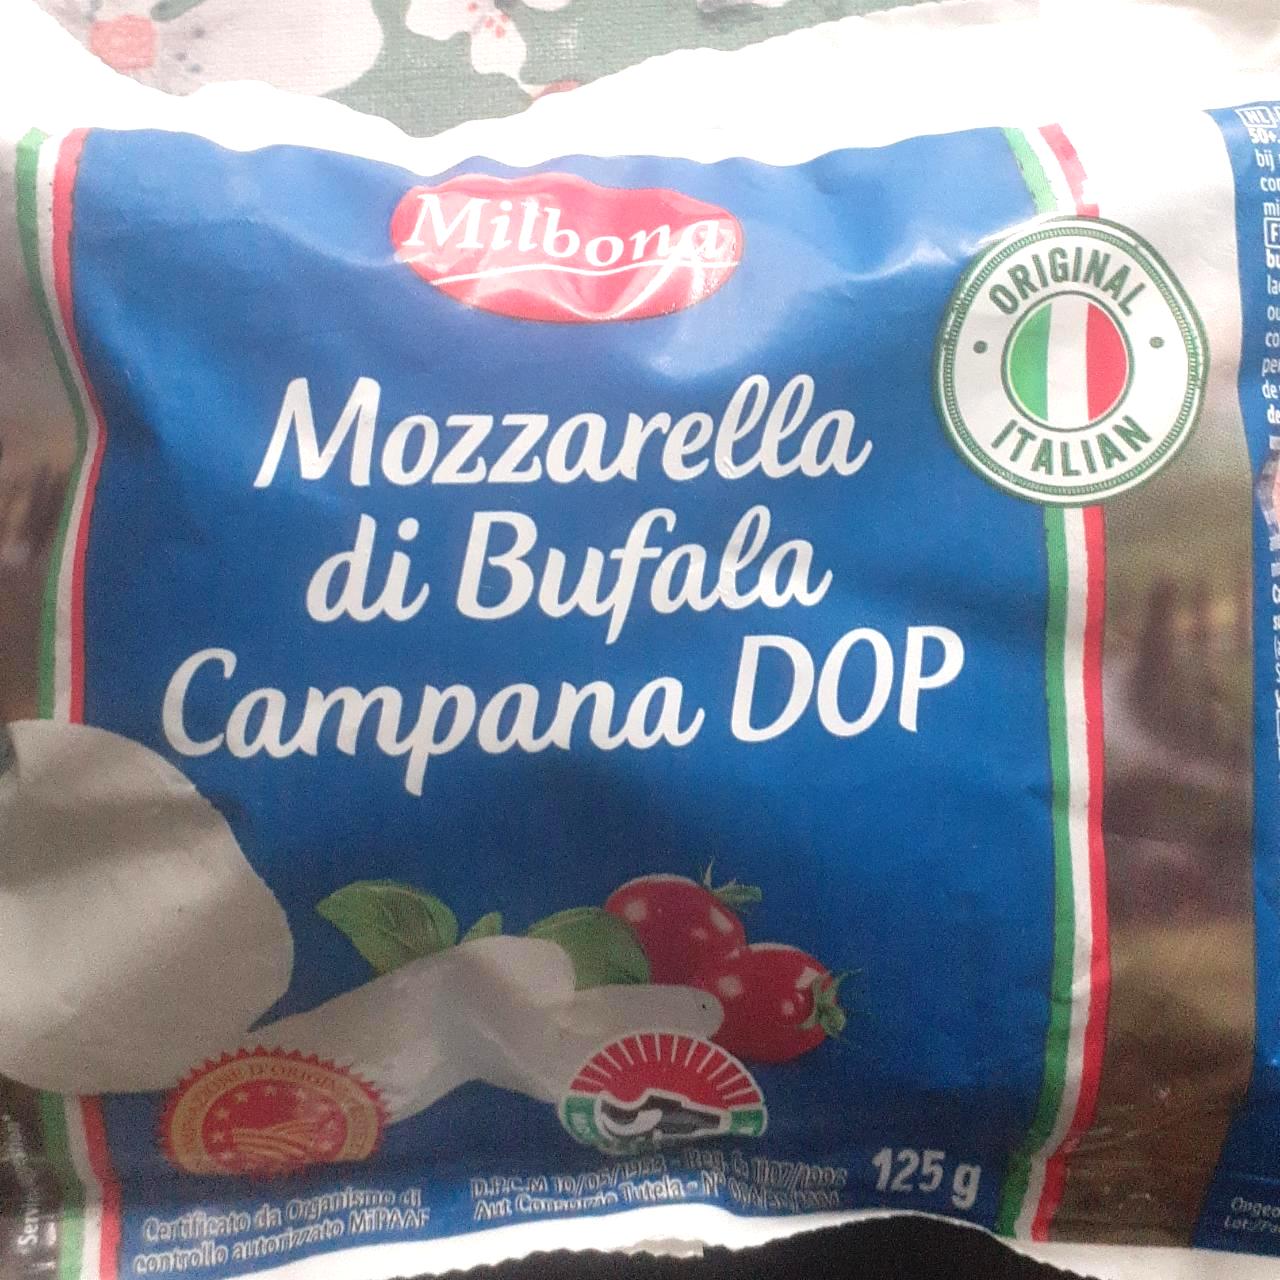 Képek - Mozzarella de Bufalo Campana DOP Milbona